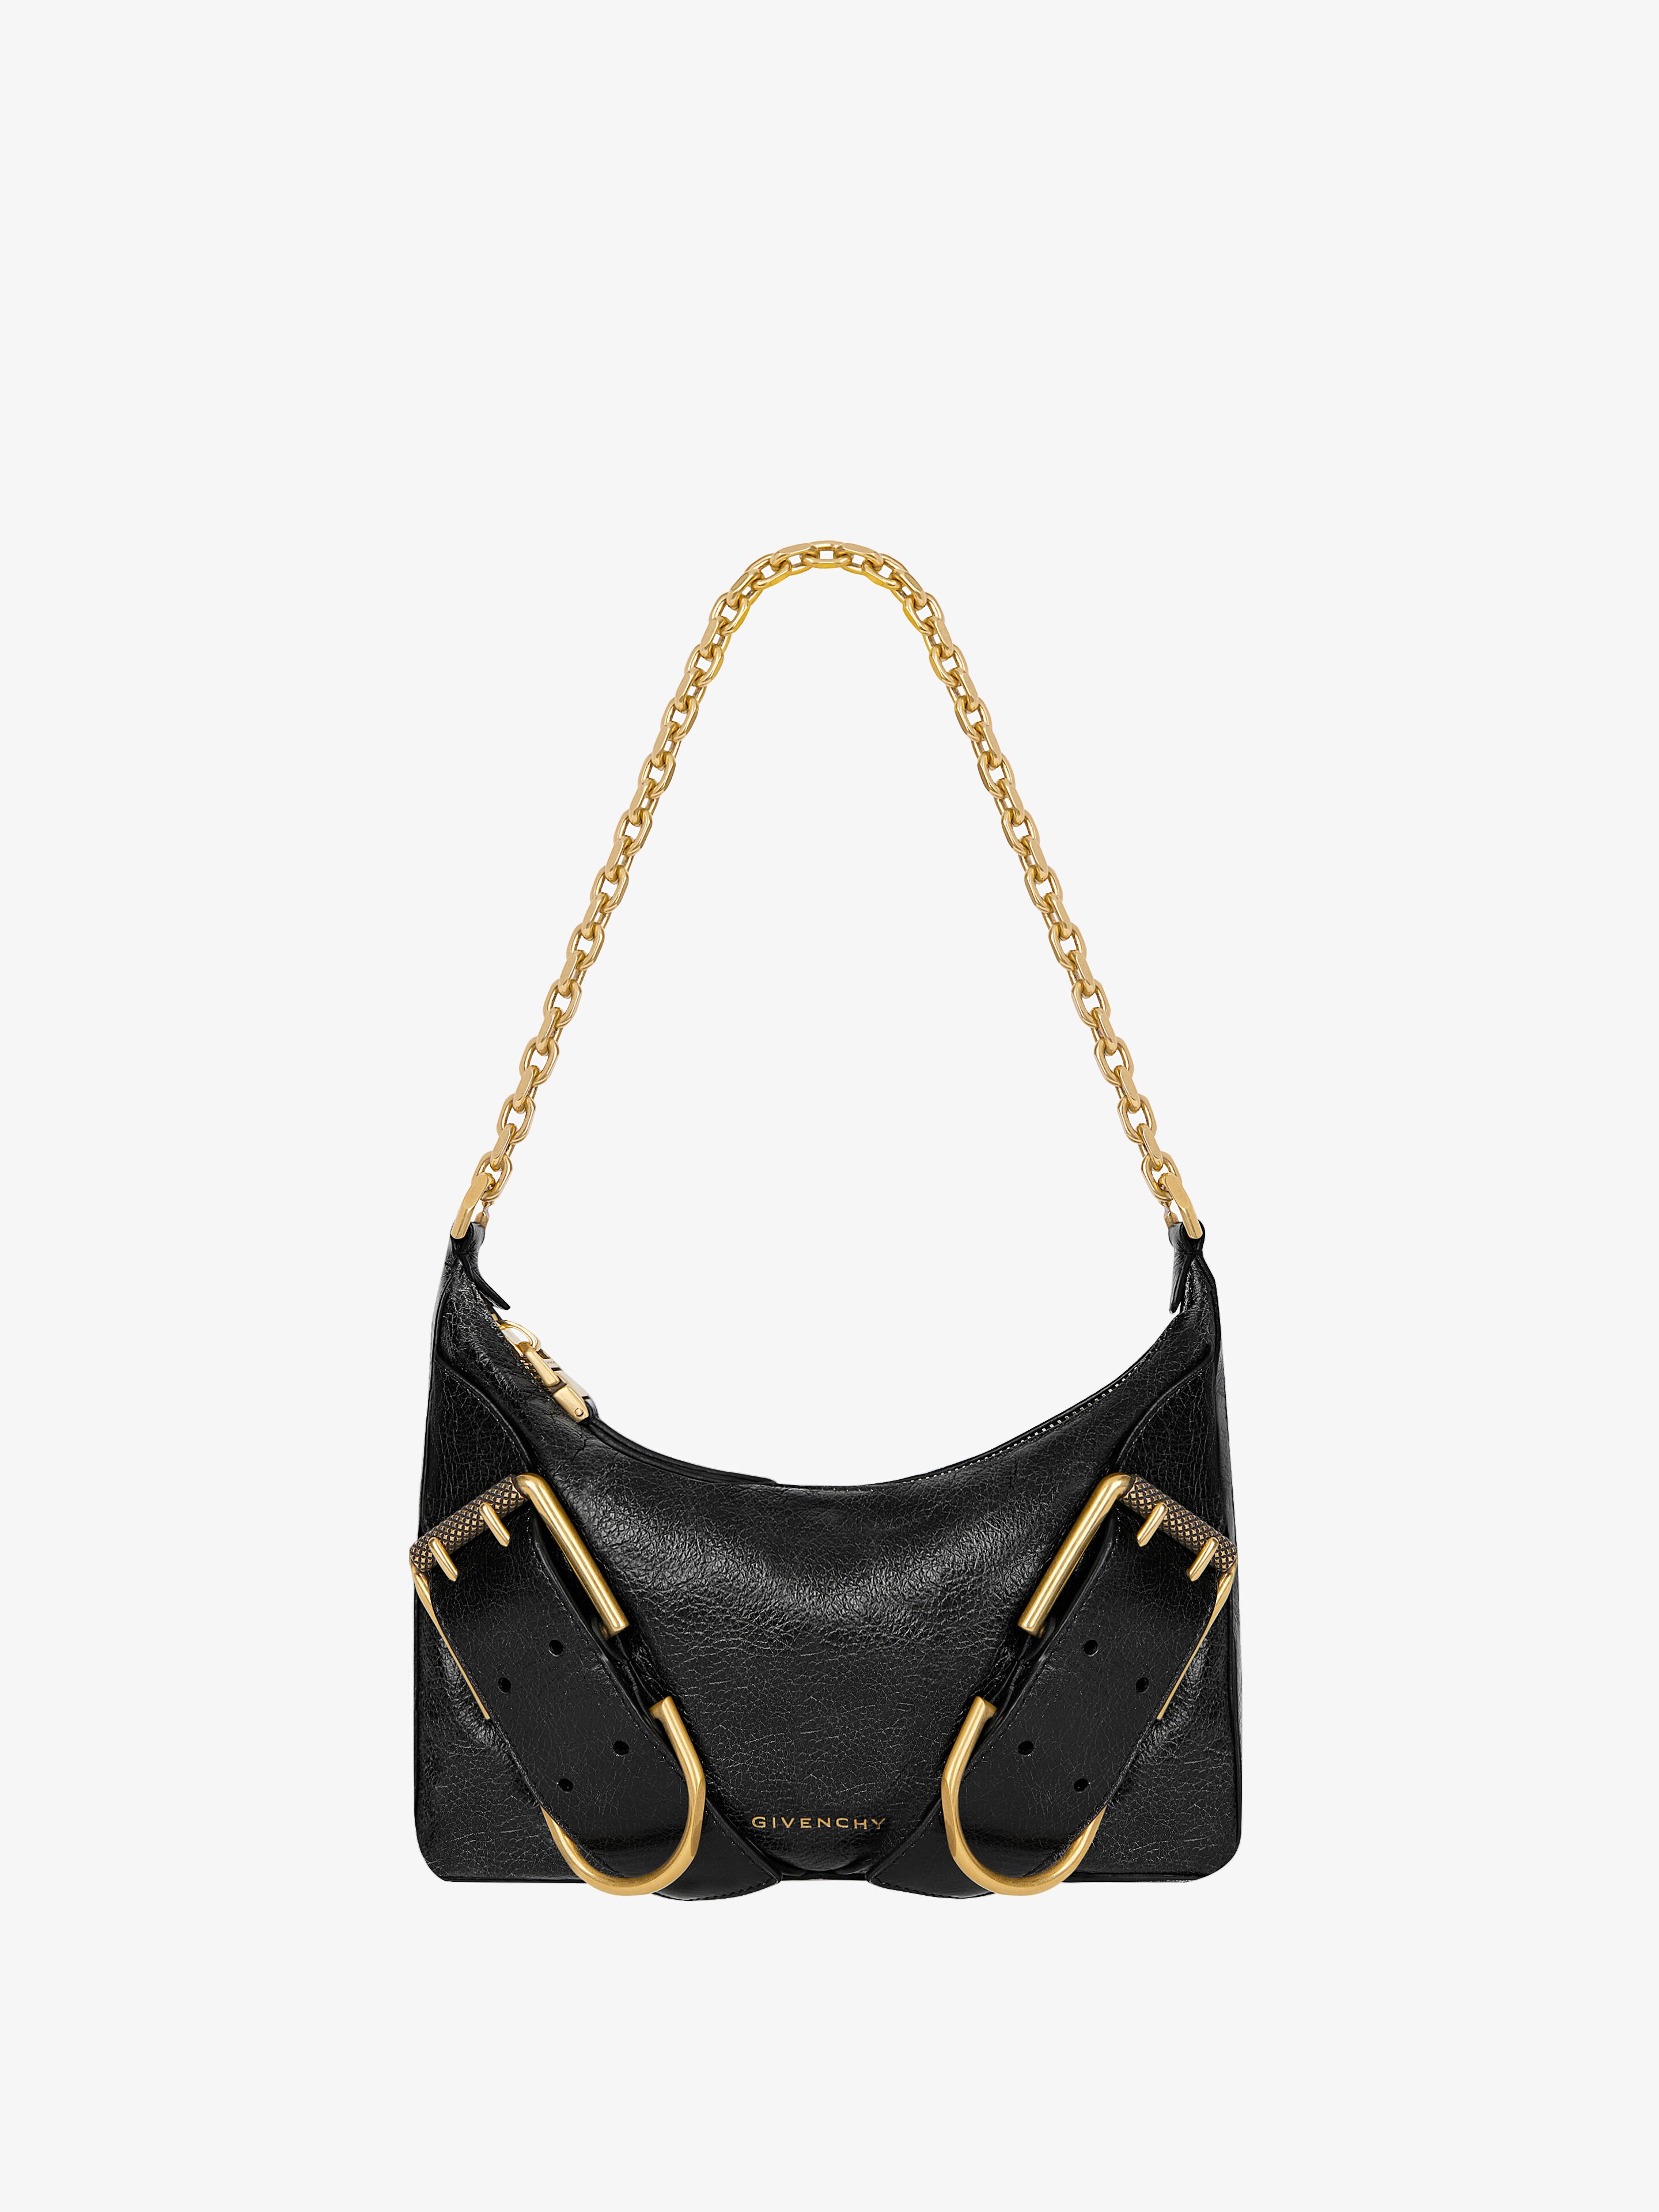 Shoulder bags | Women bags | GIVENCHY Paris | Givenchy